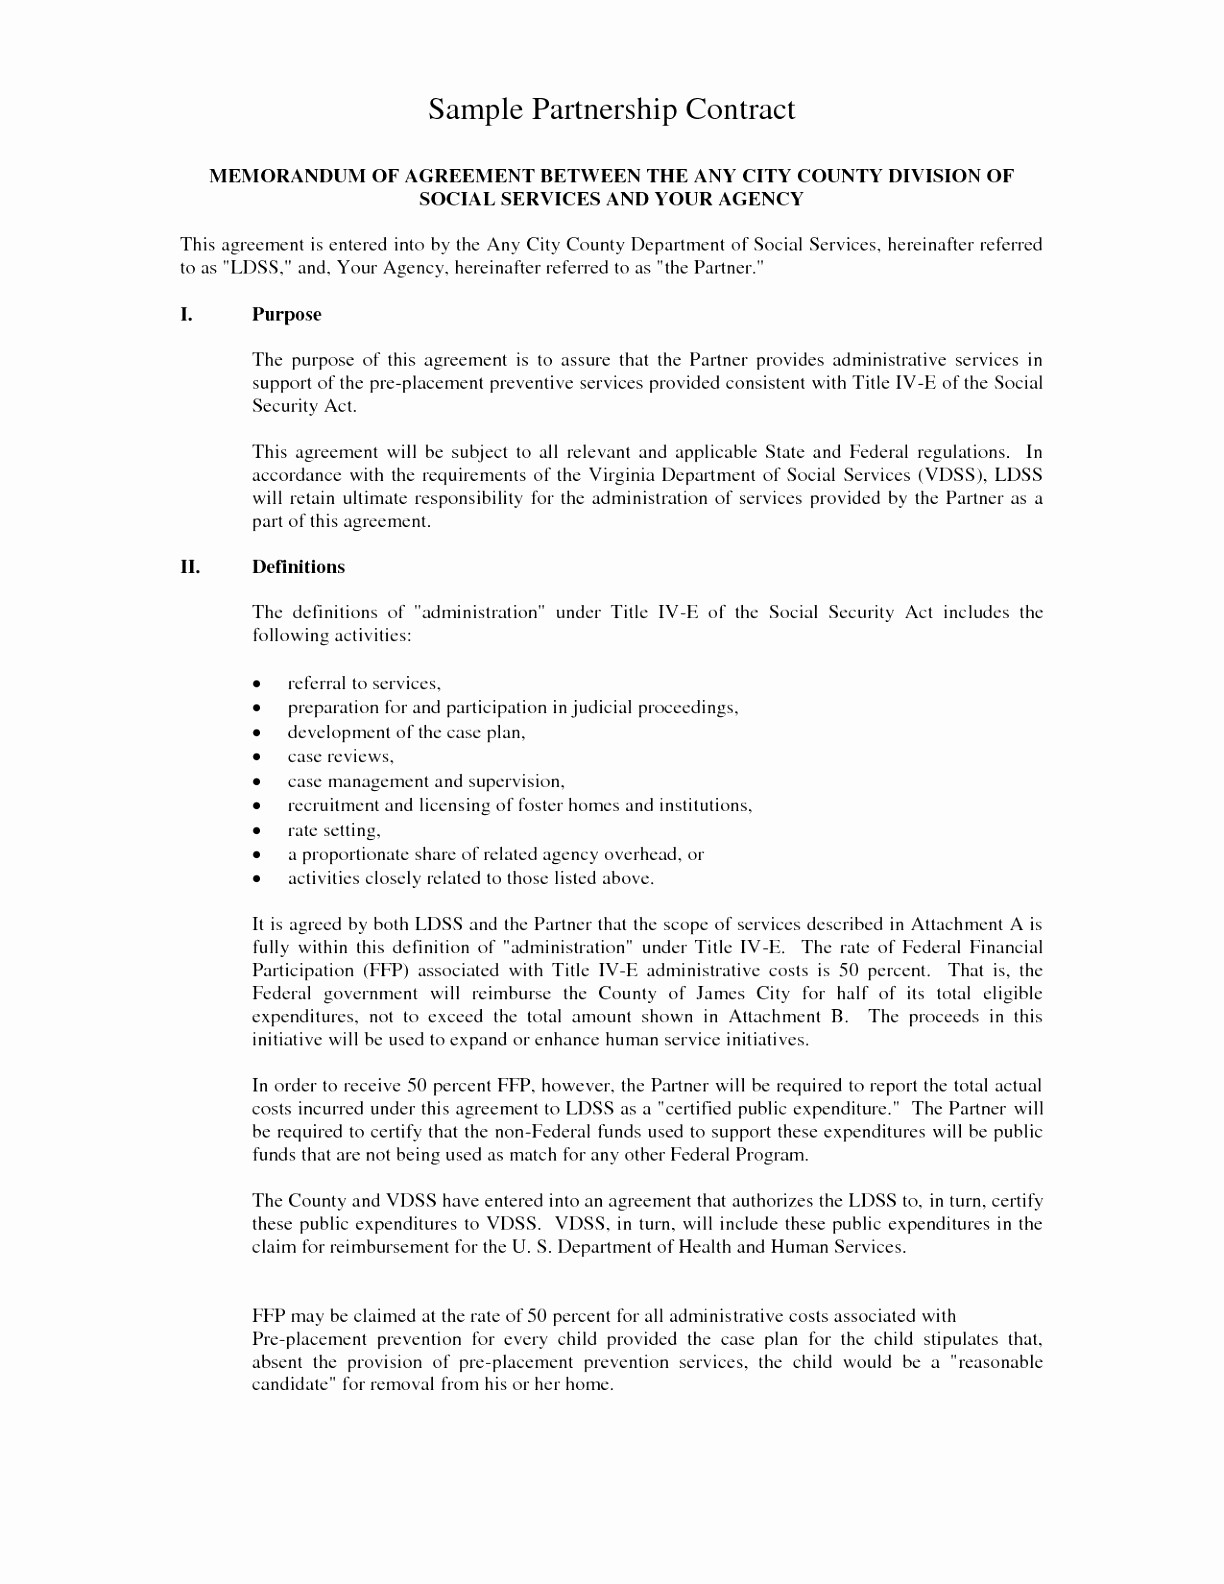 Sample Memorandum Of Understanding Business Partnership New Document